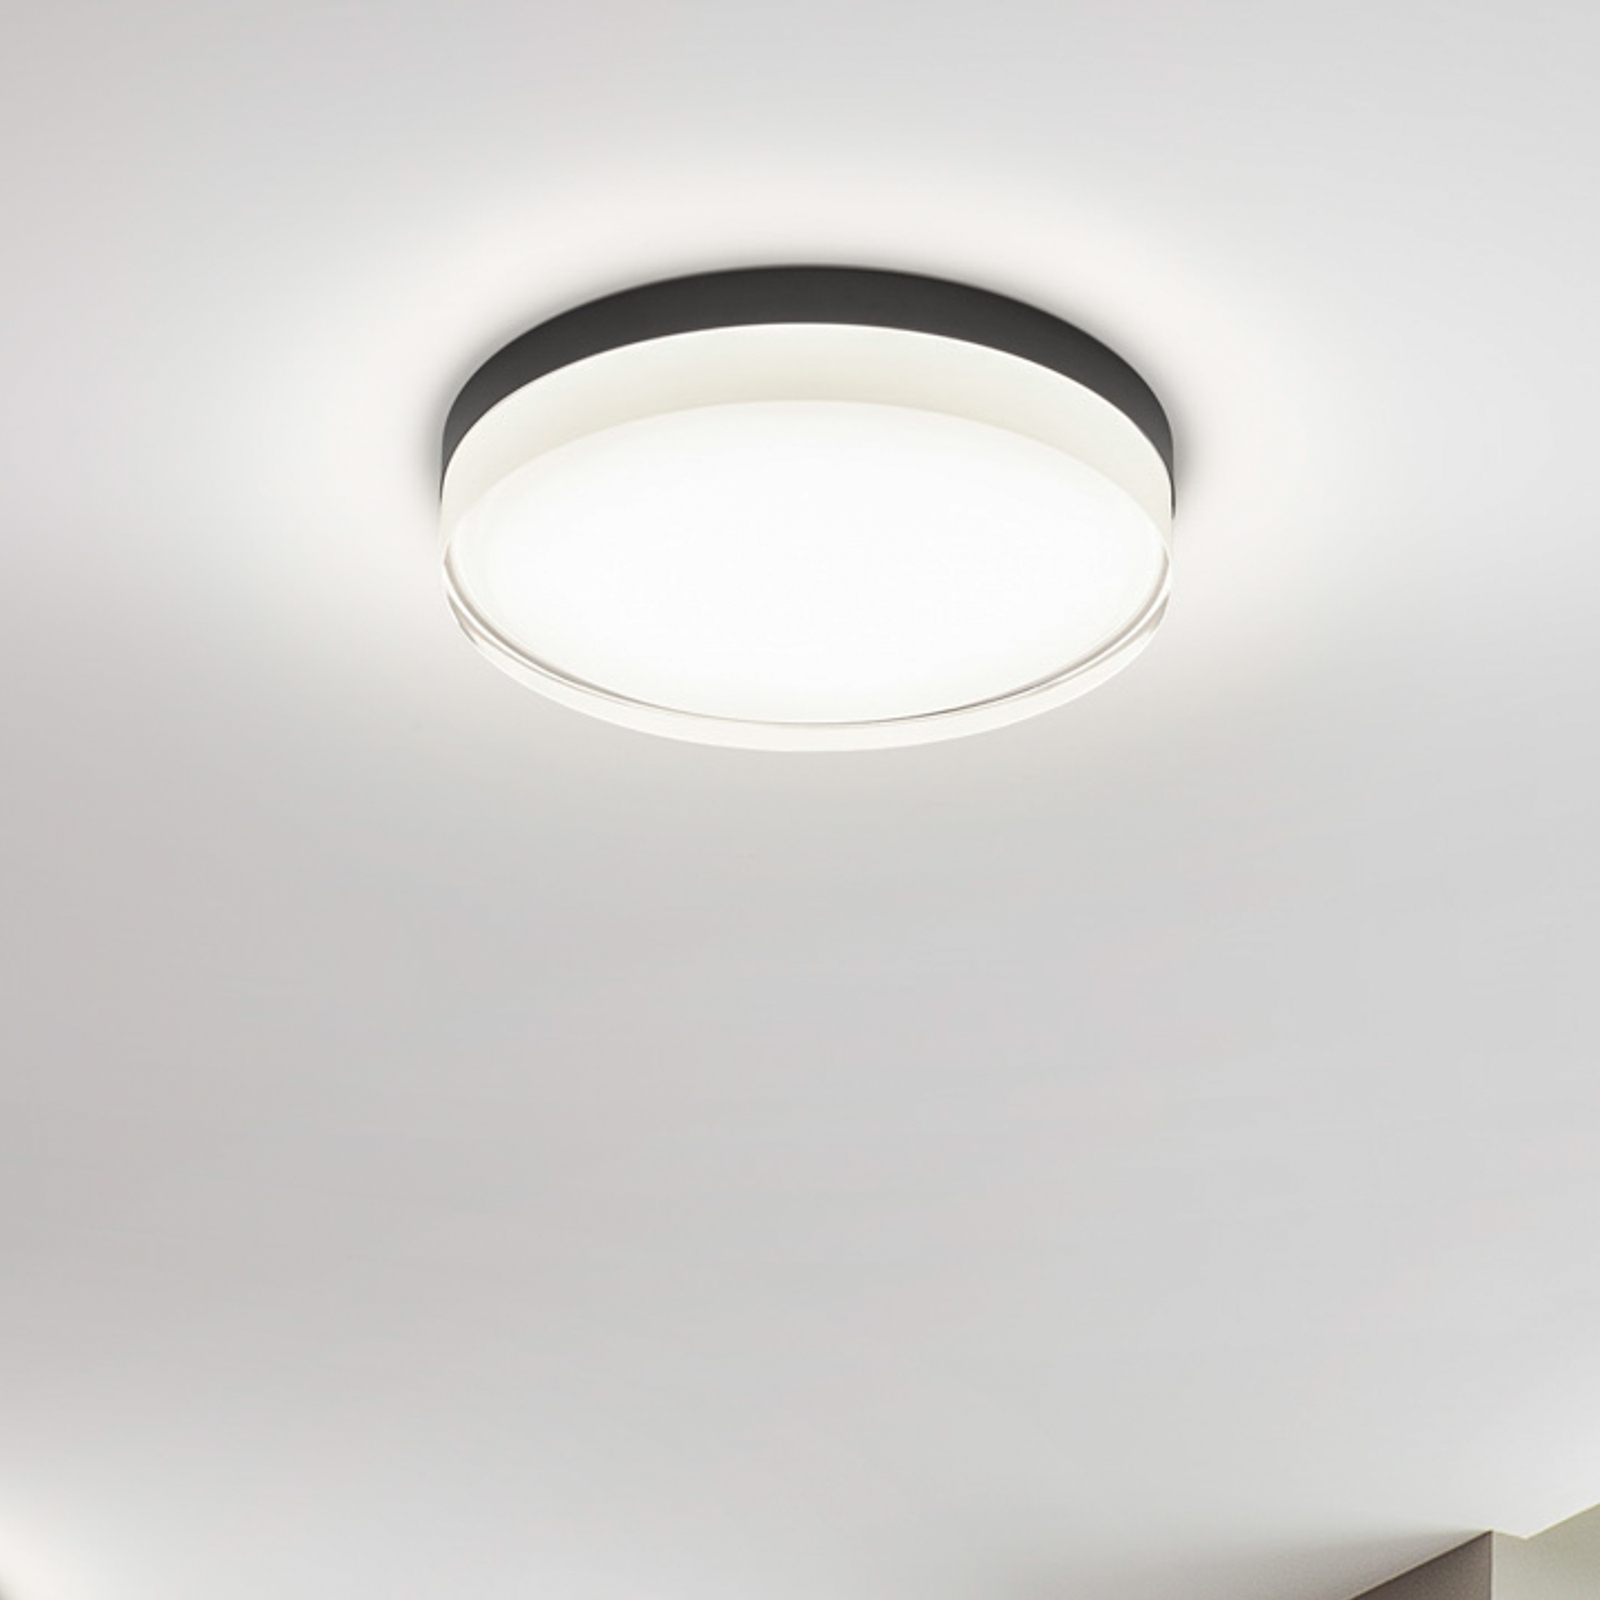 Helestra Tana LED ceiling light, black, Ø 33 cm